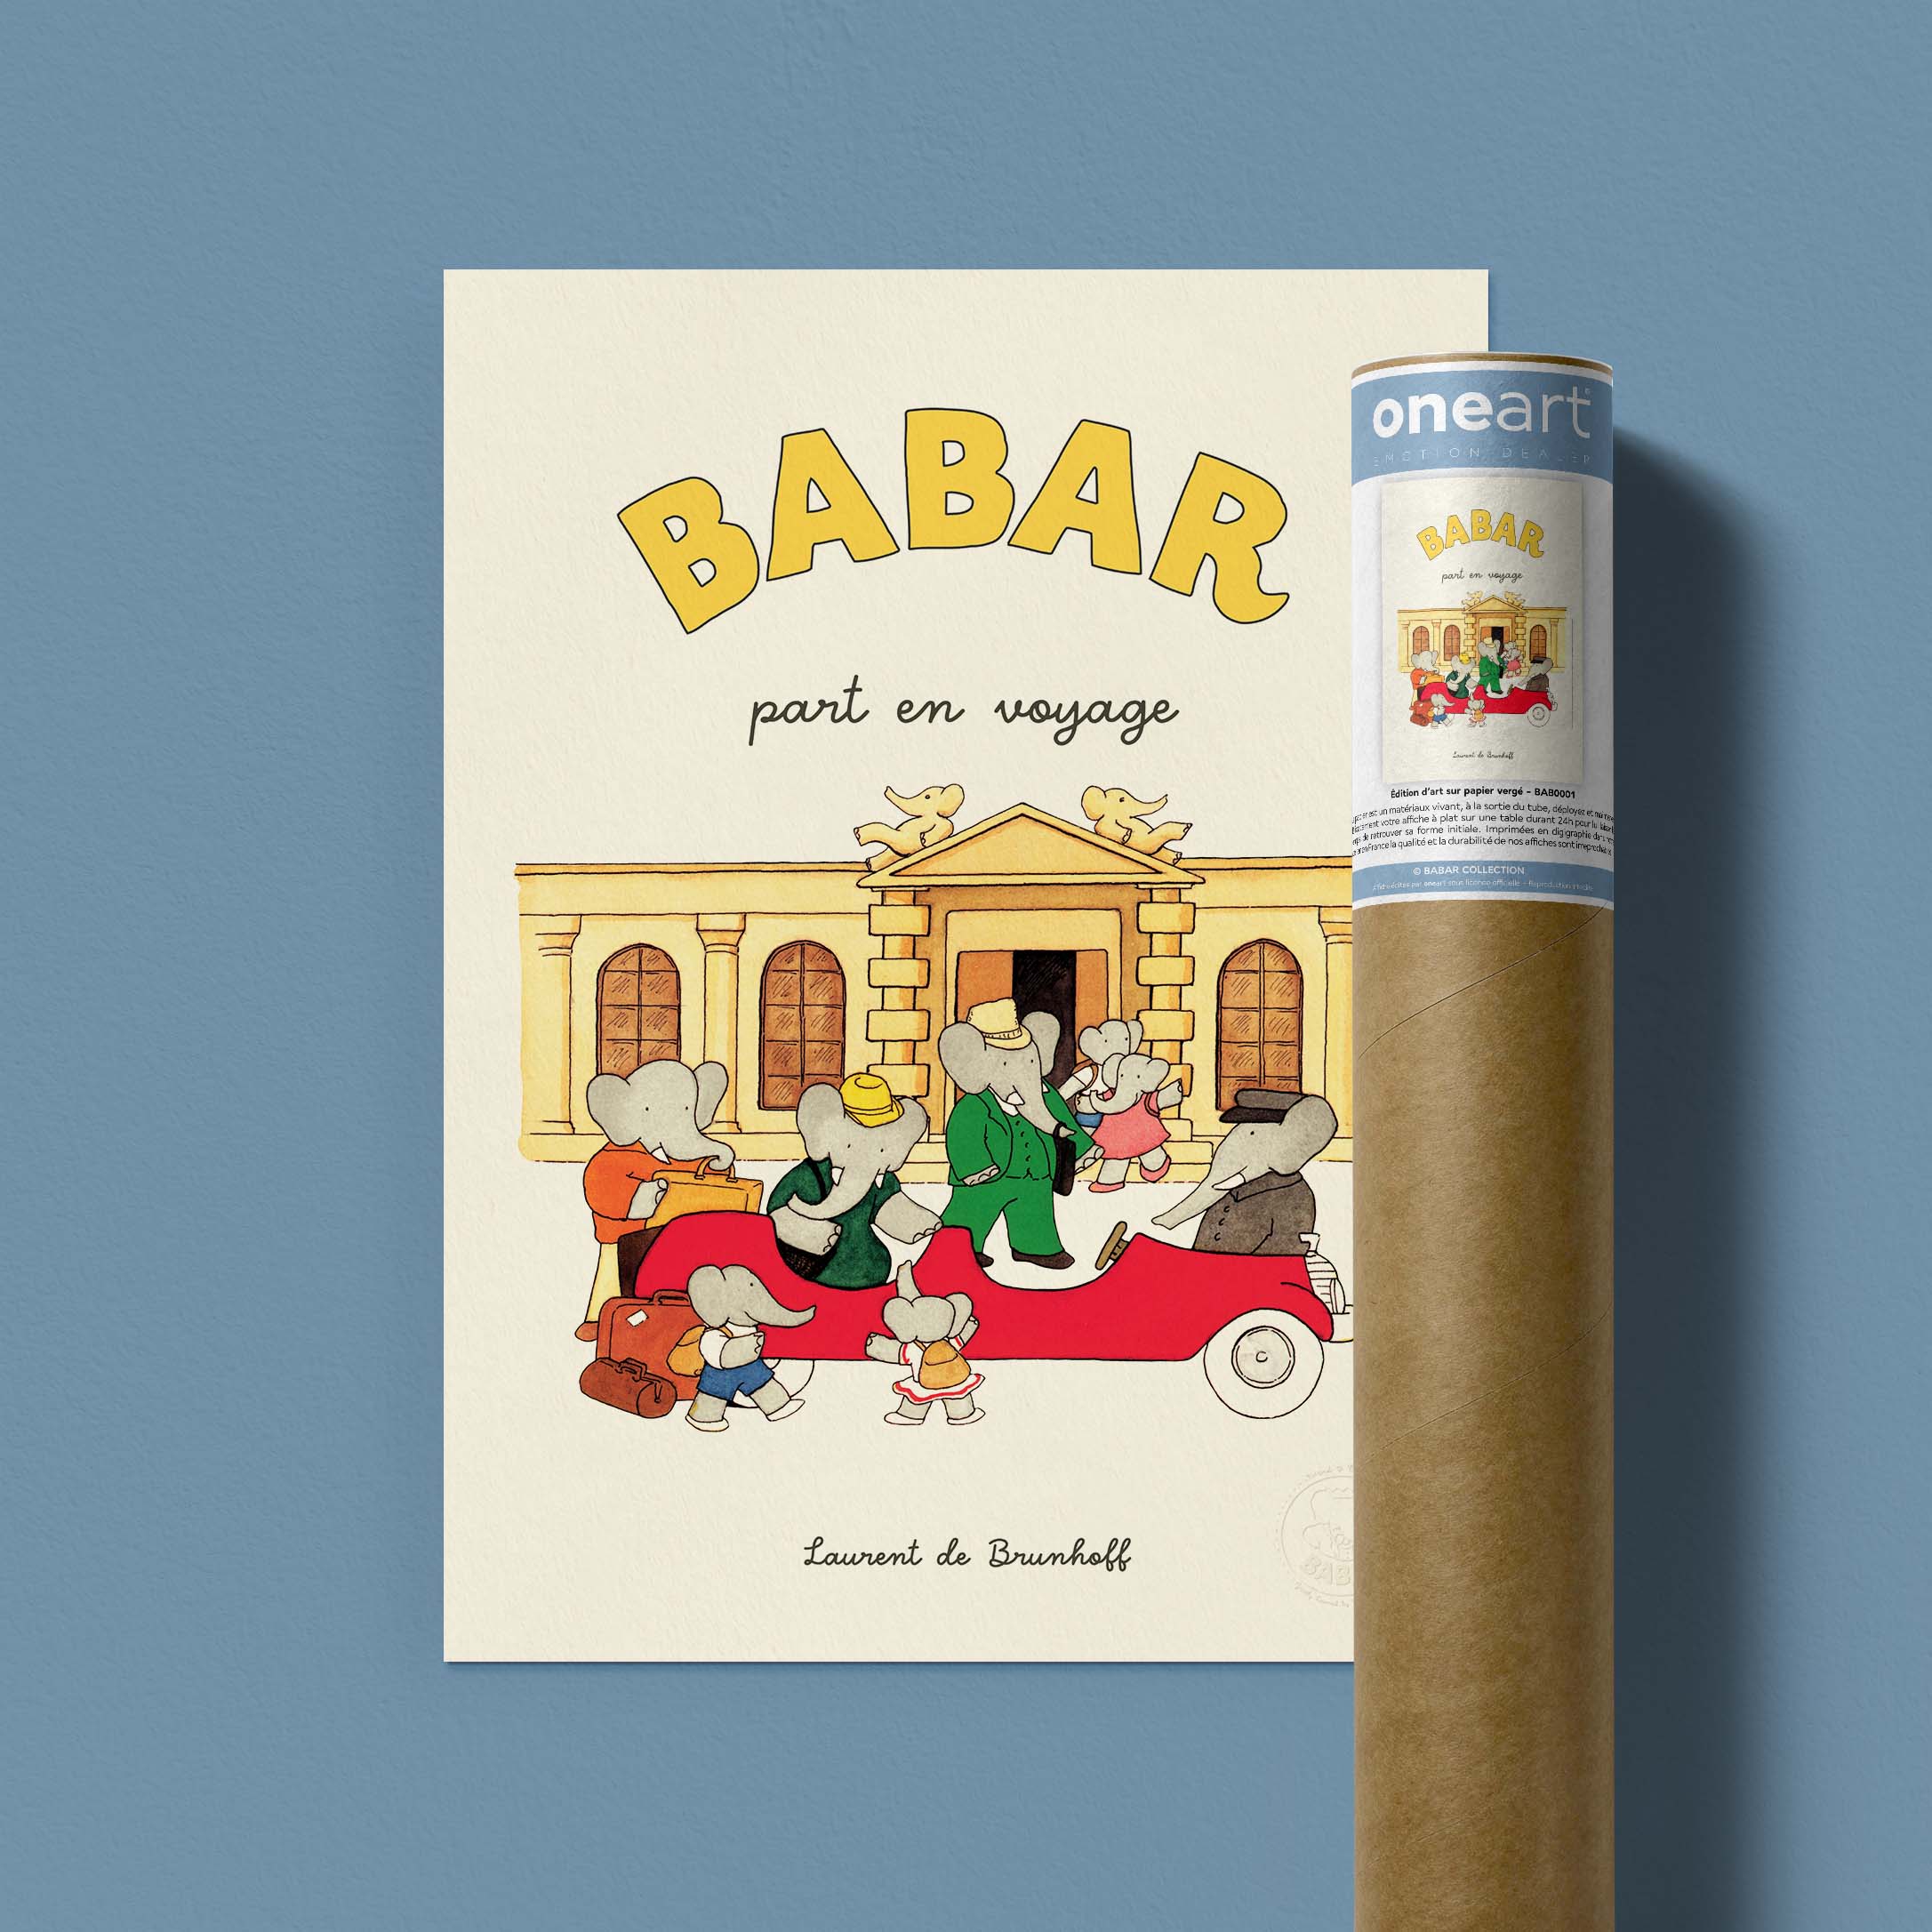 Affiche Babar part en voyage